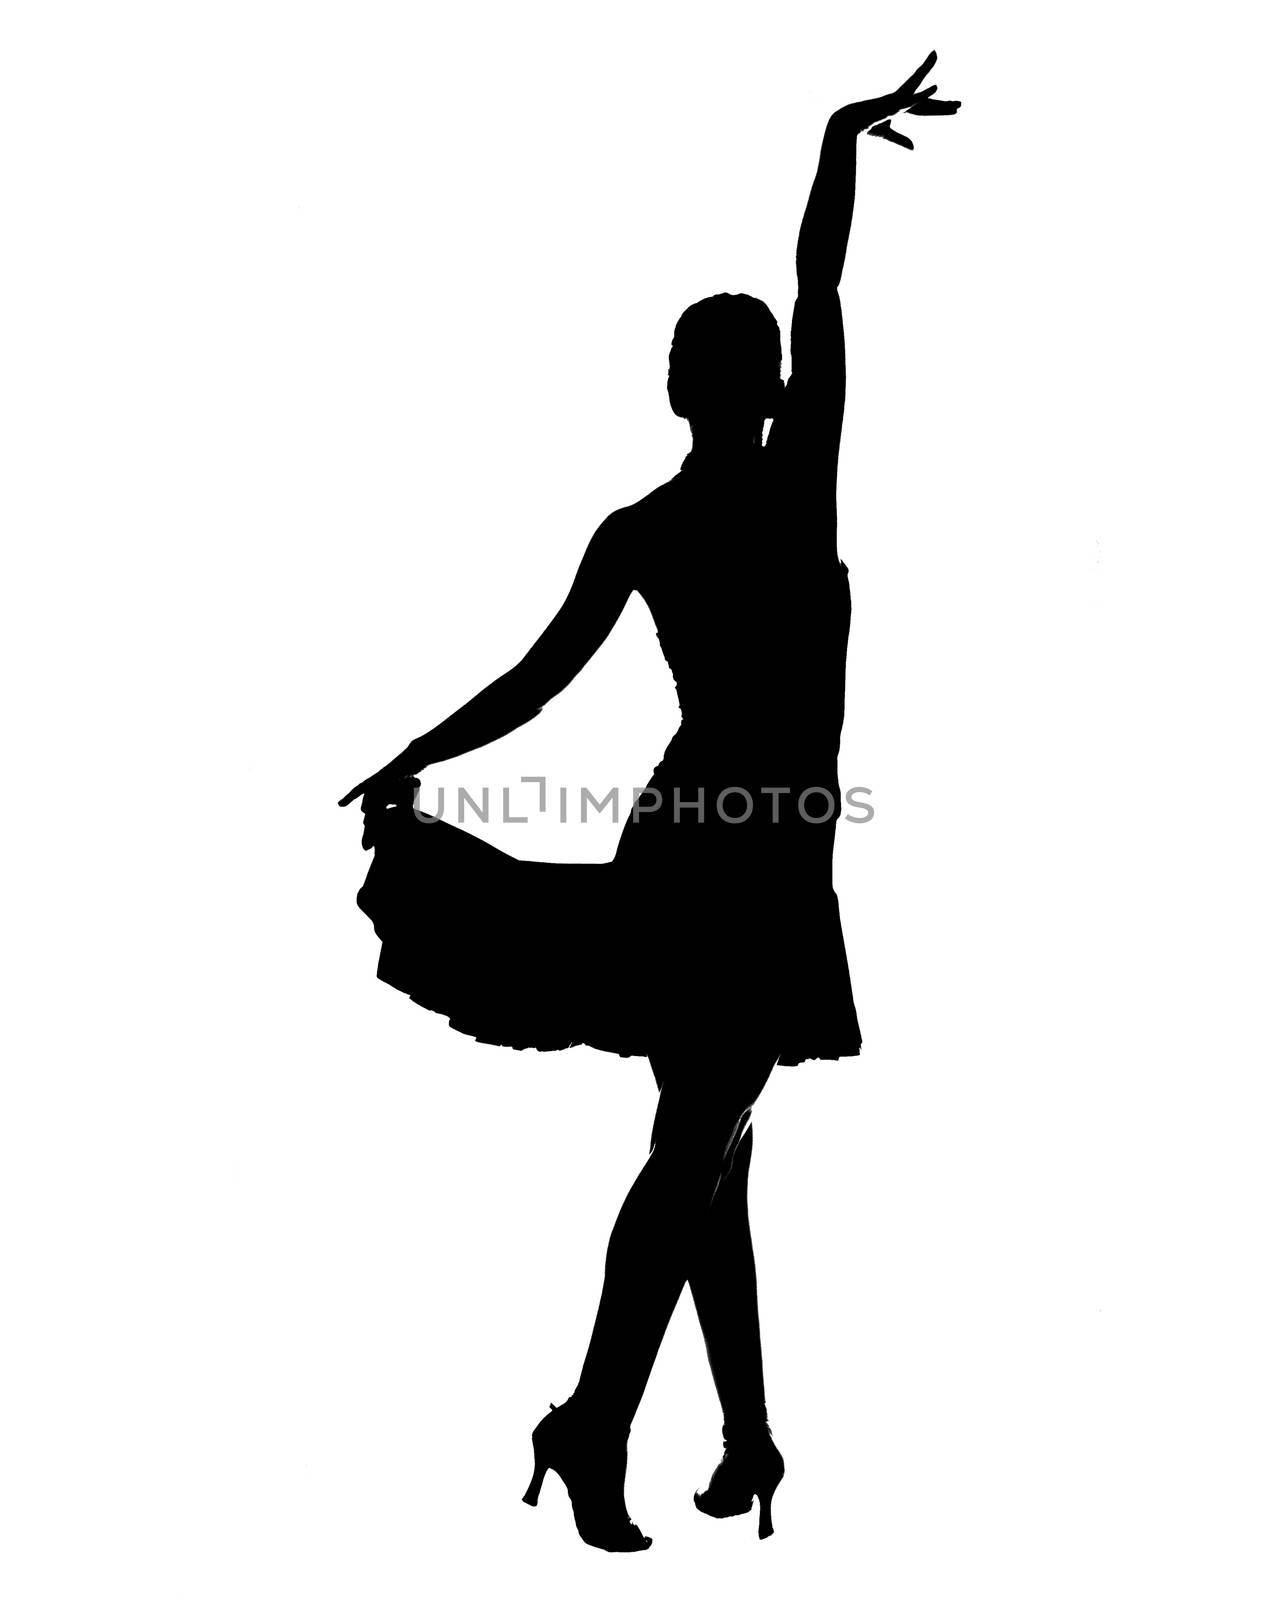 Latin dancer silhouette by gema_ibarra